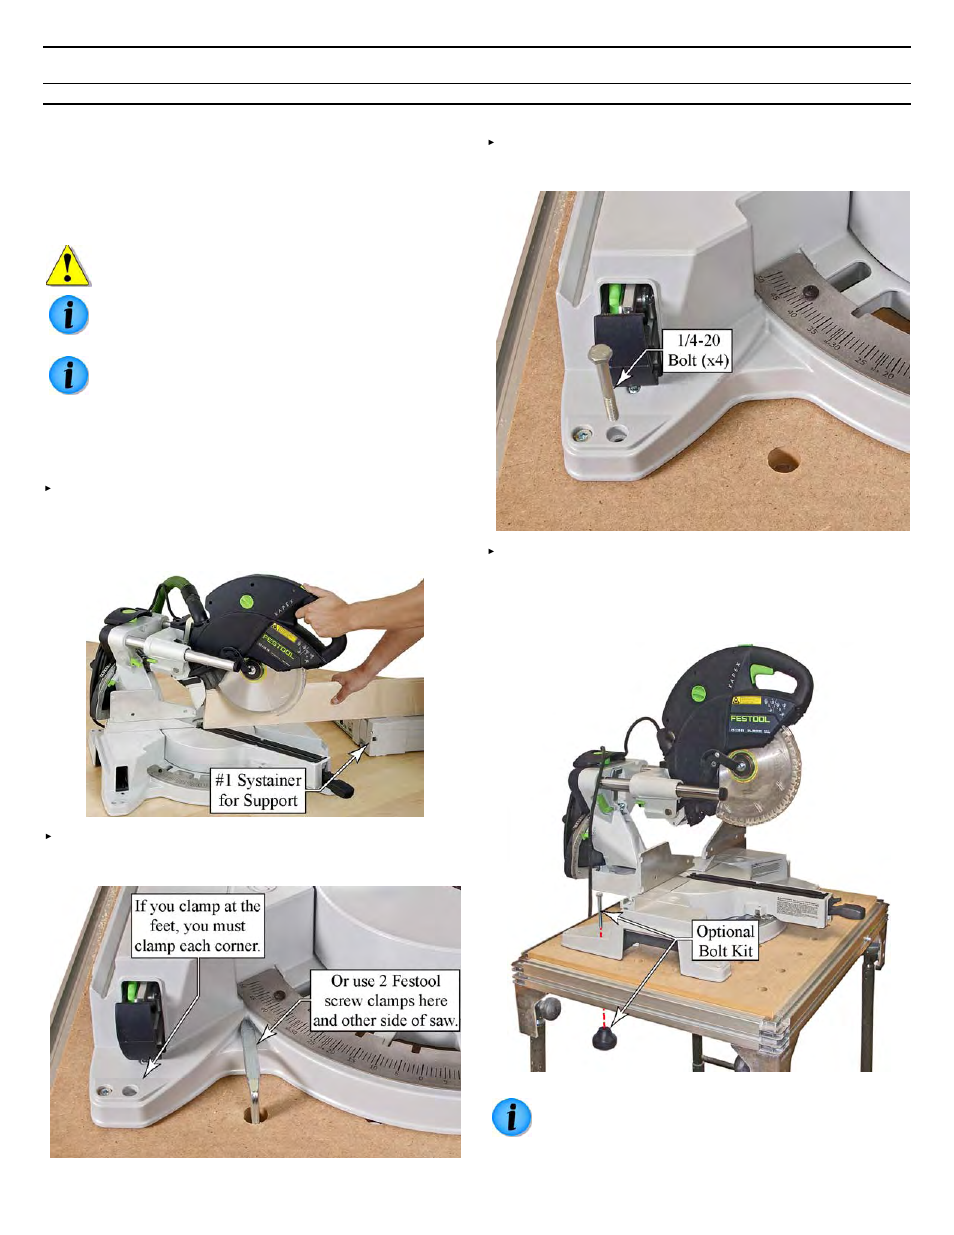 Setup, Setting up a new miter saw | Festool Kapex KS 120 User Manual | Page 8 / 32